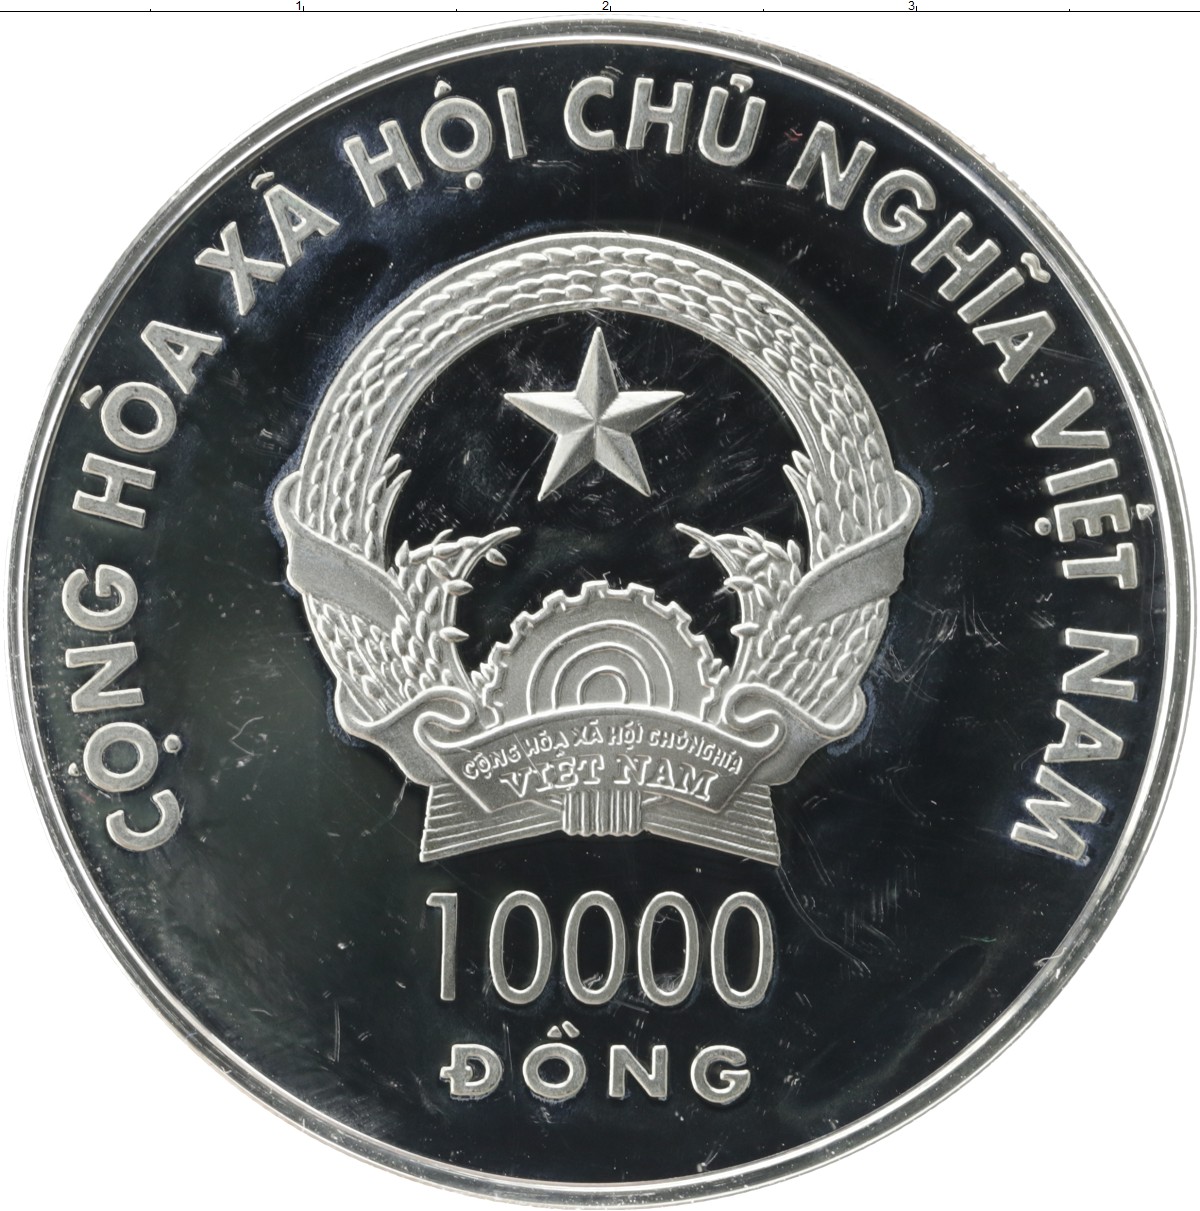 вьетнам серебро